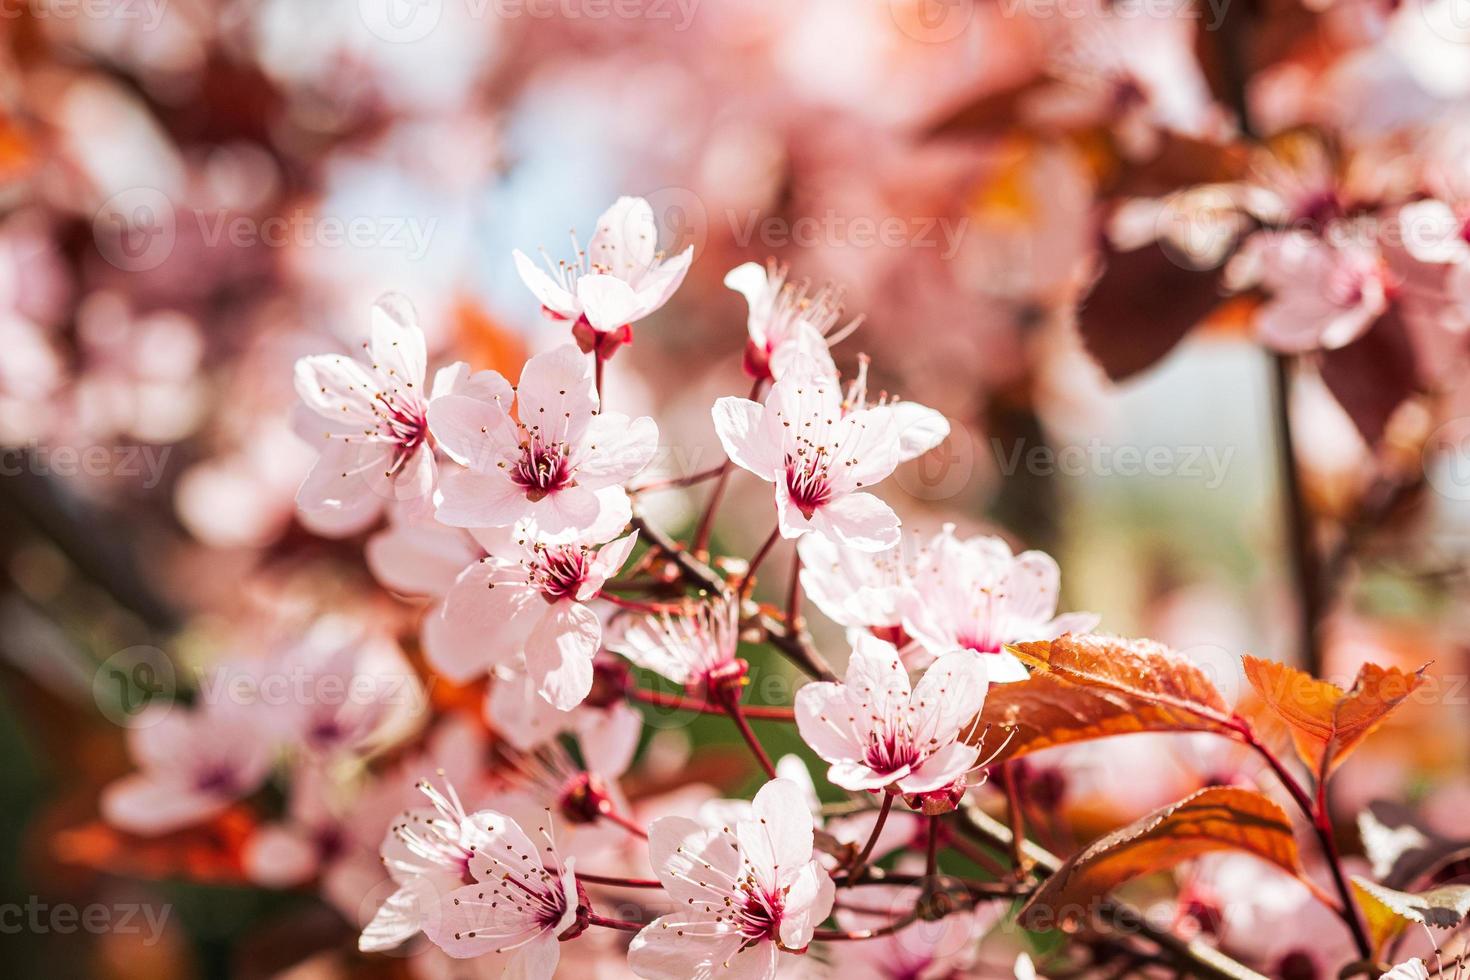 Plum fruit pink flowers in bloom on tree branch spring season selective focus photo